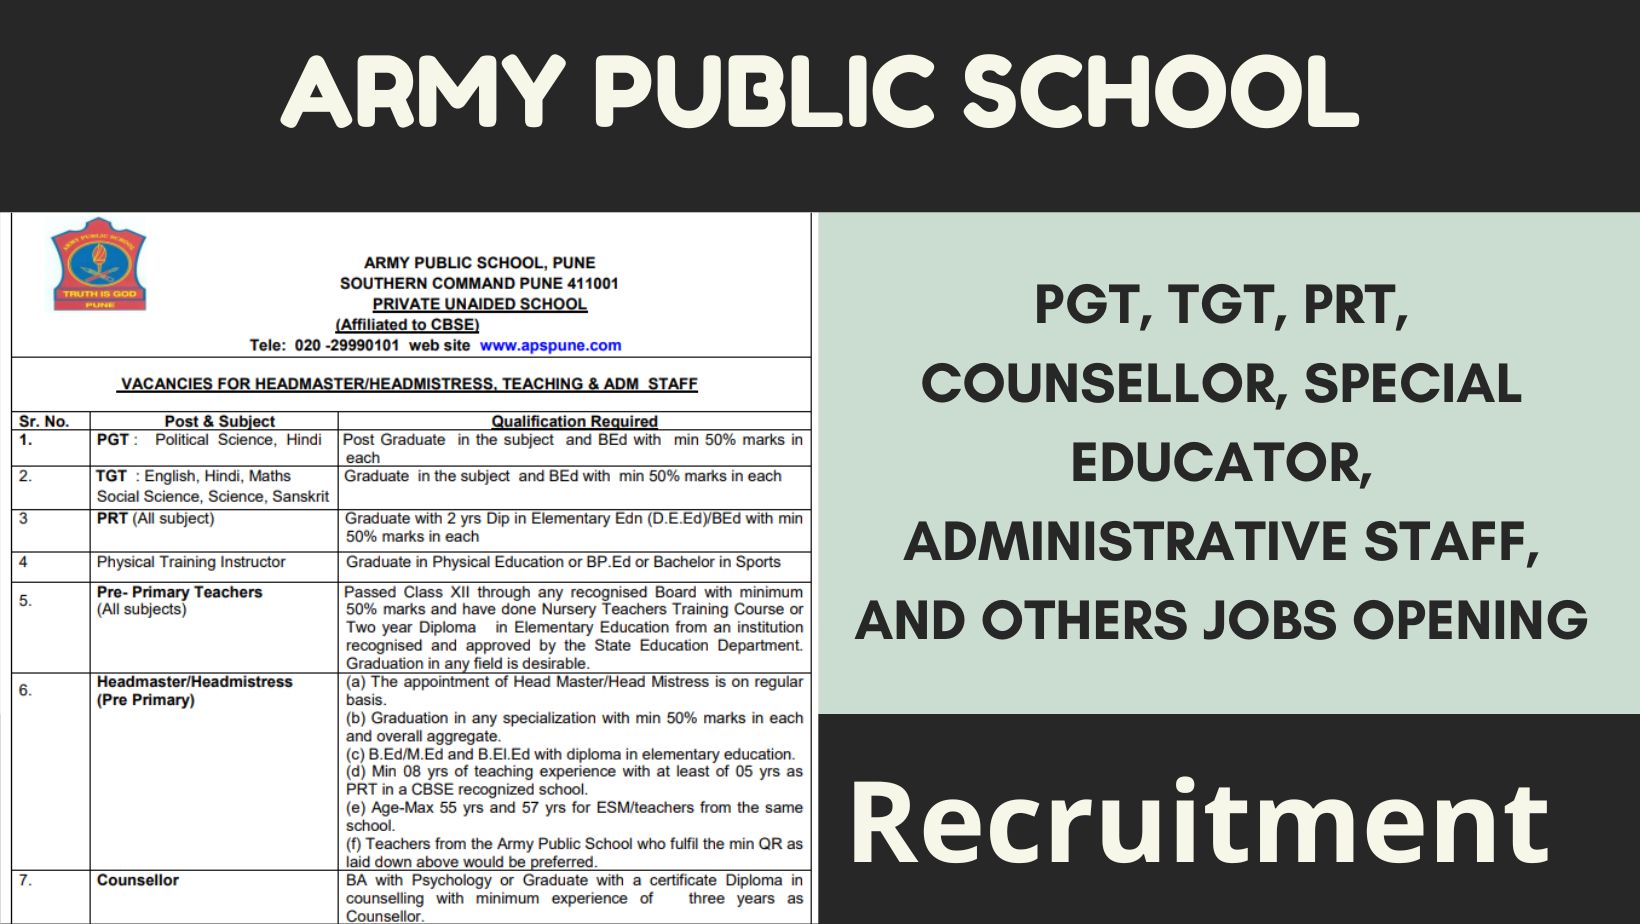 PGT, TGT, PRT, & Multiple Job Opening at Army Public School!